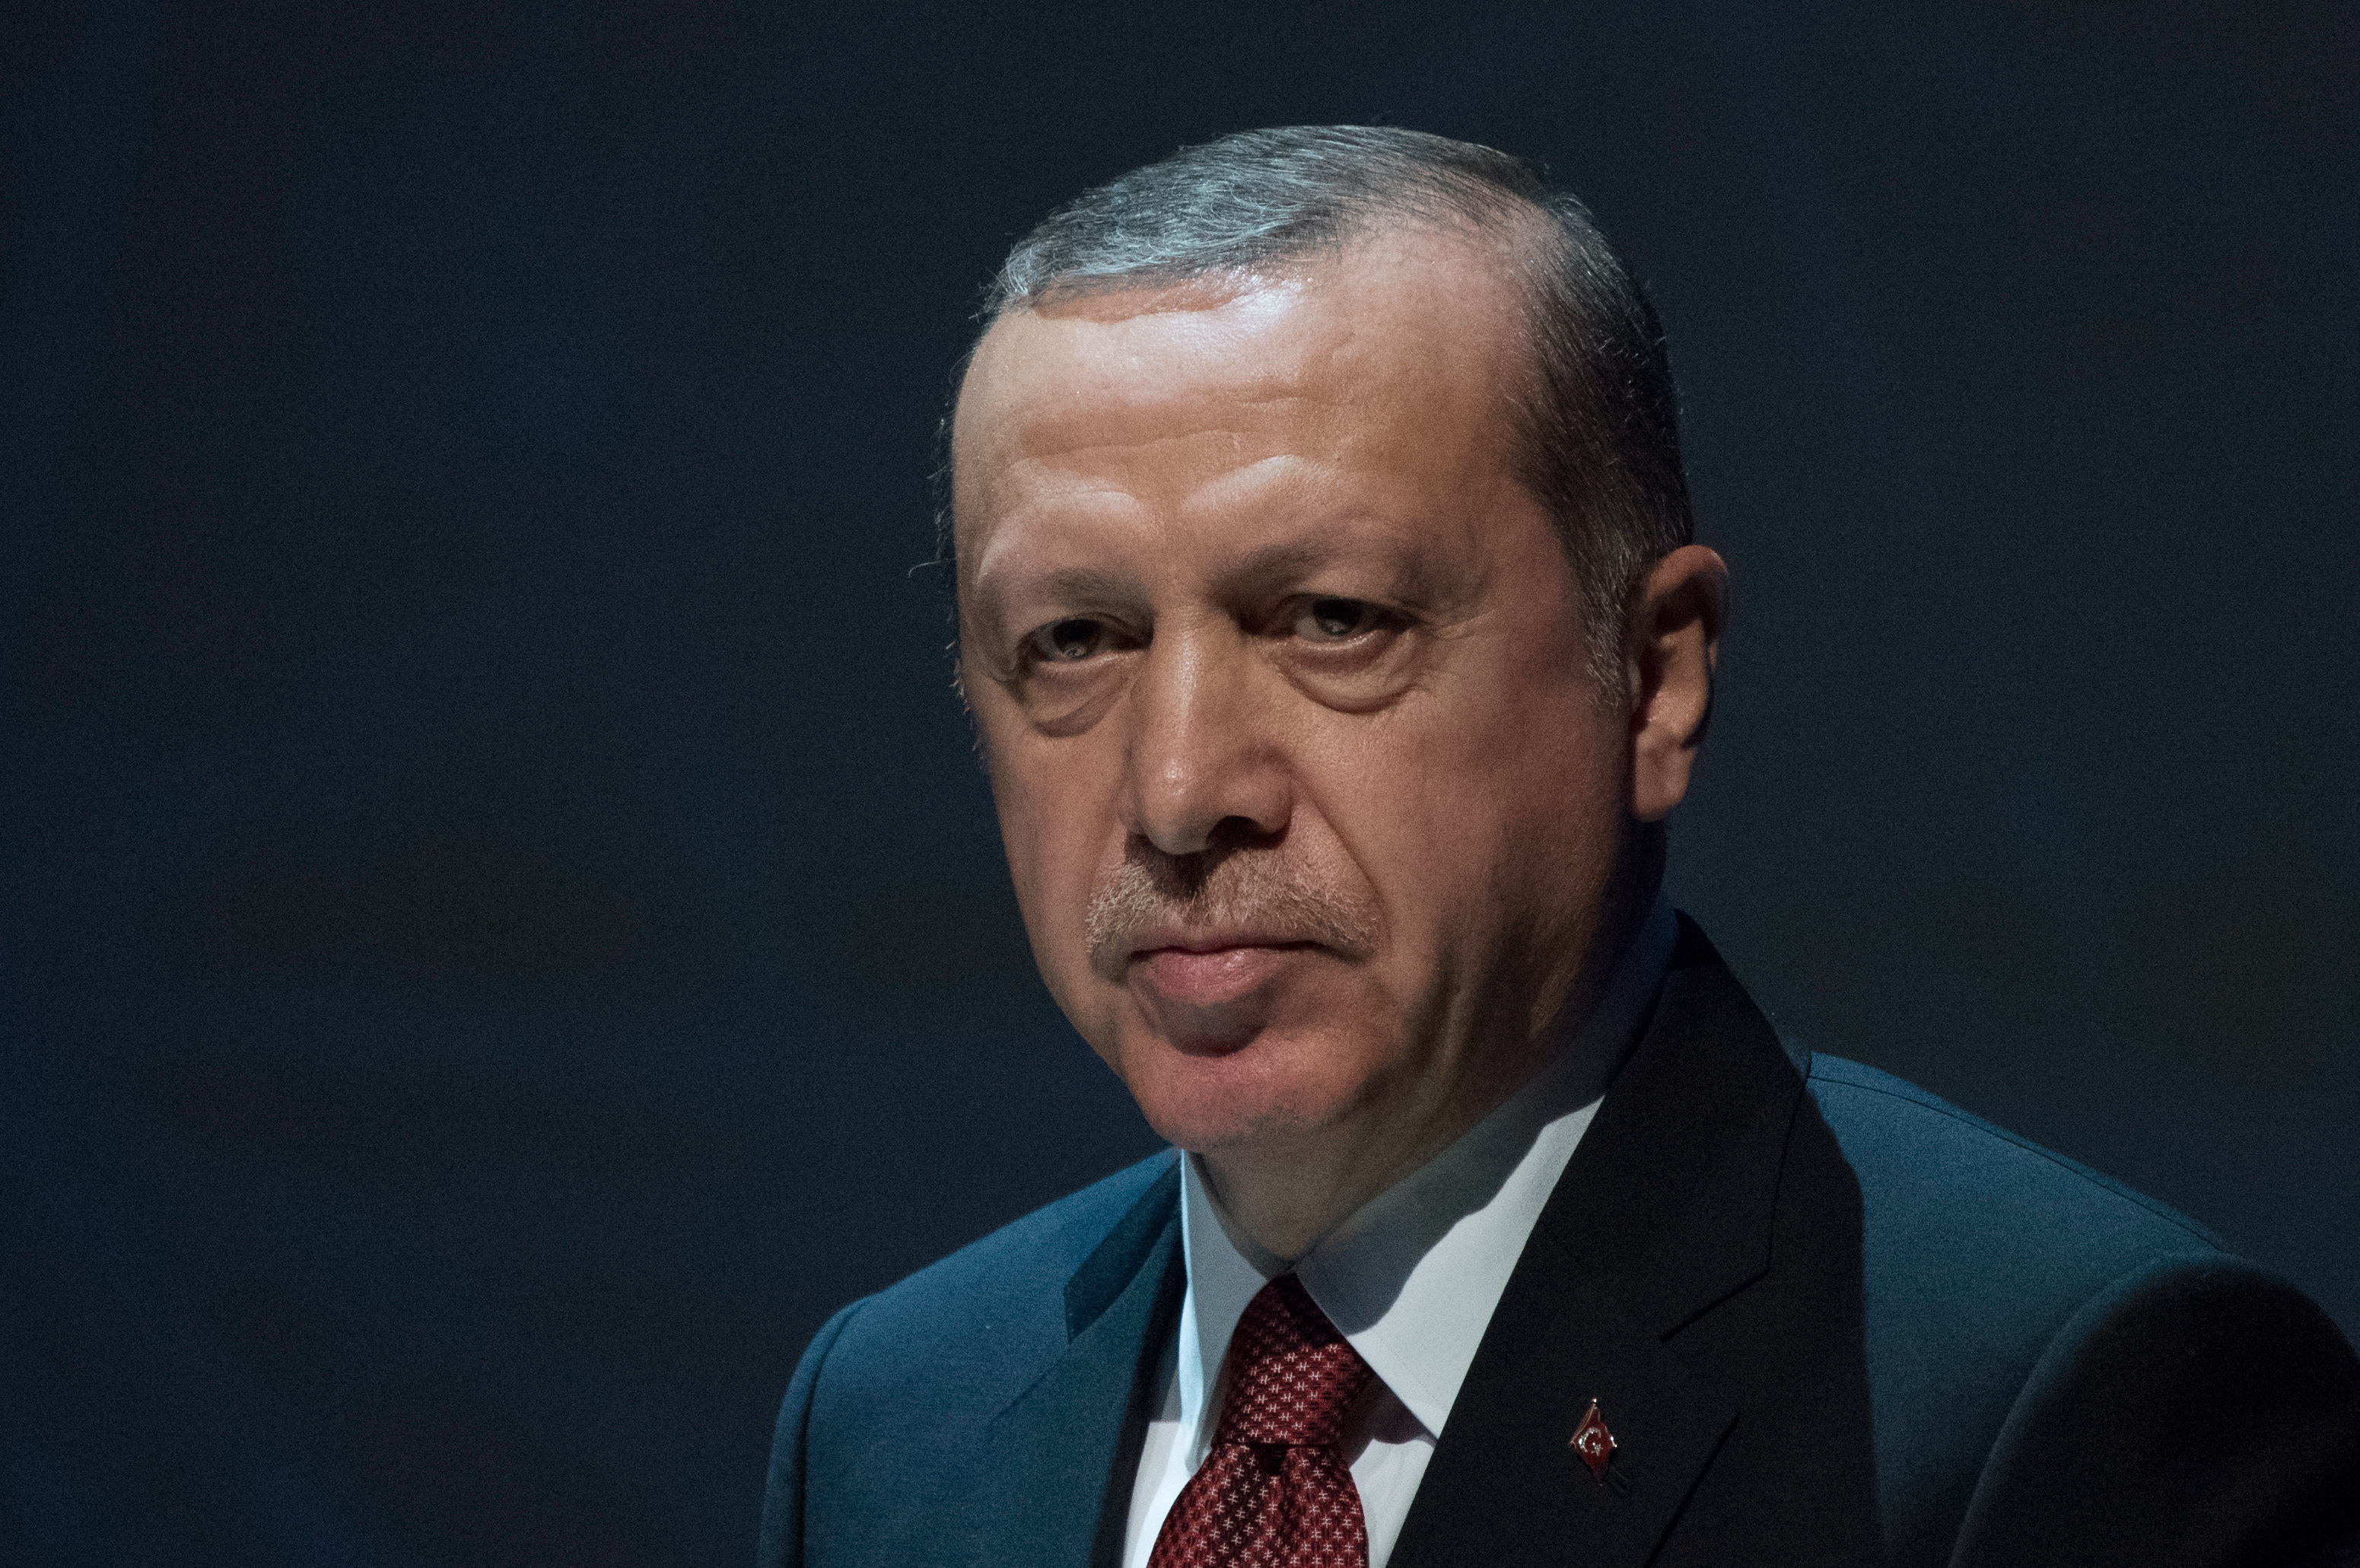 Turkish leader Erdoğan slams NATO ally Biden for calling Putin a ‘killer,’ says US president's remarks were ‘truly unacceptable’